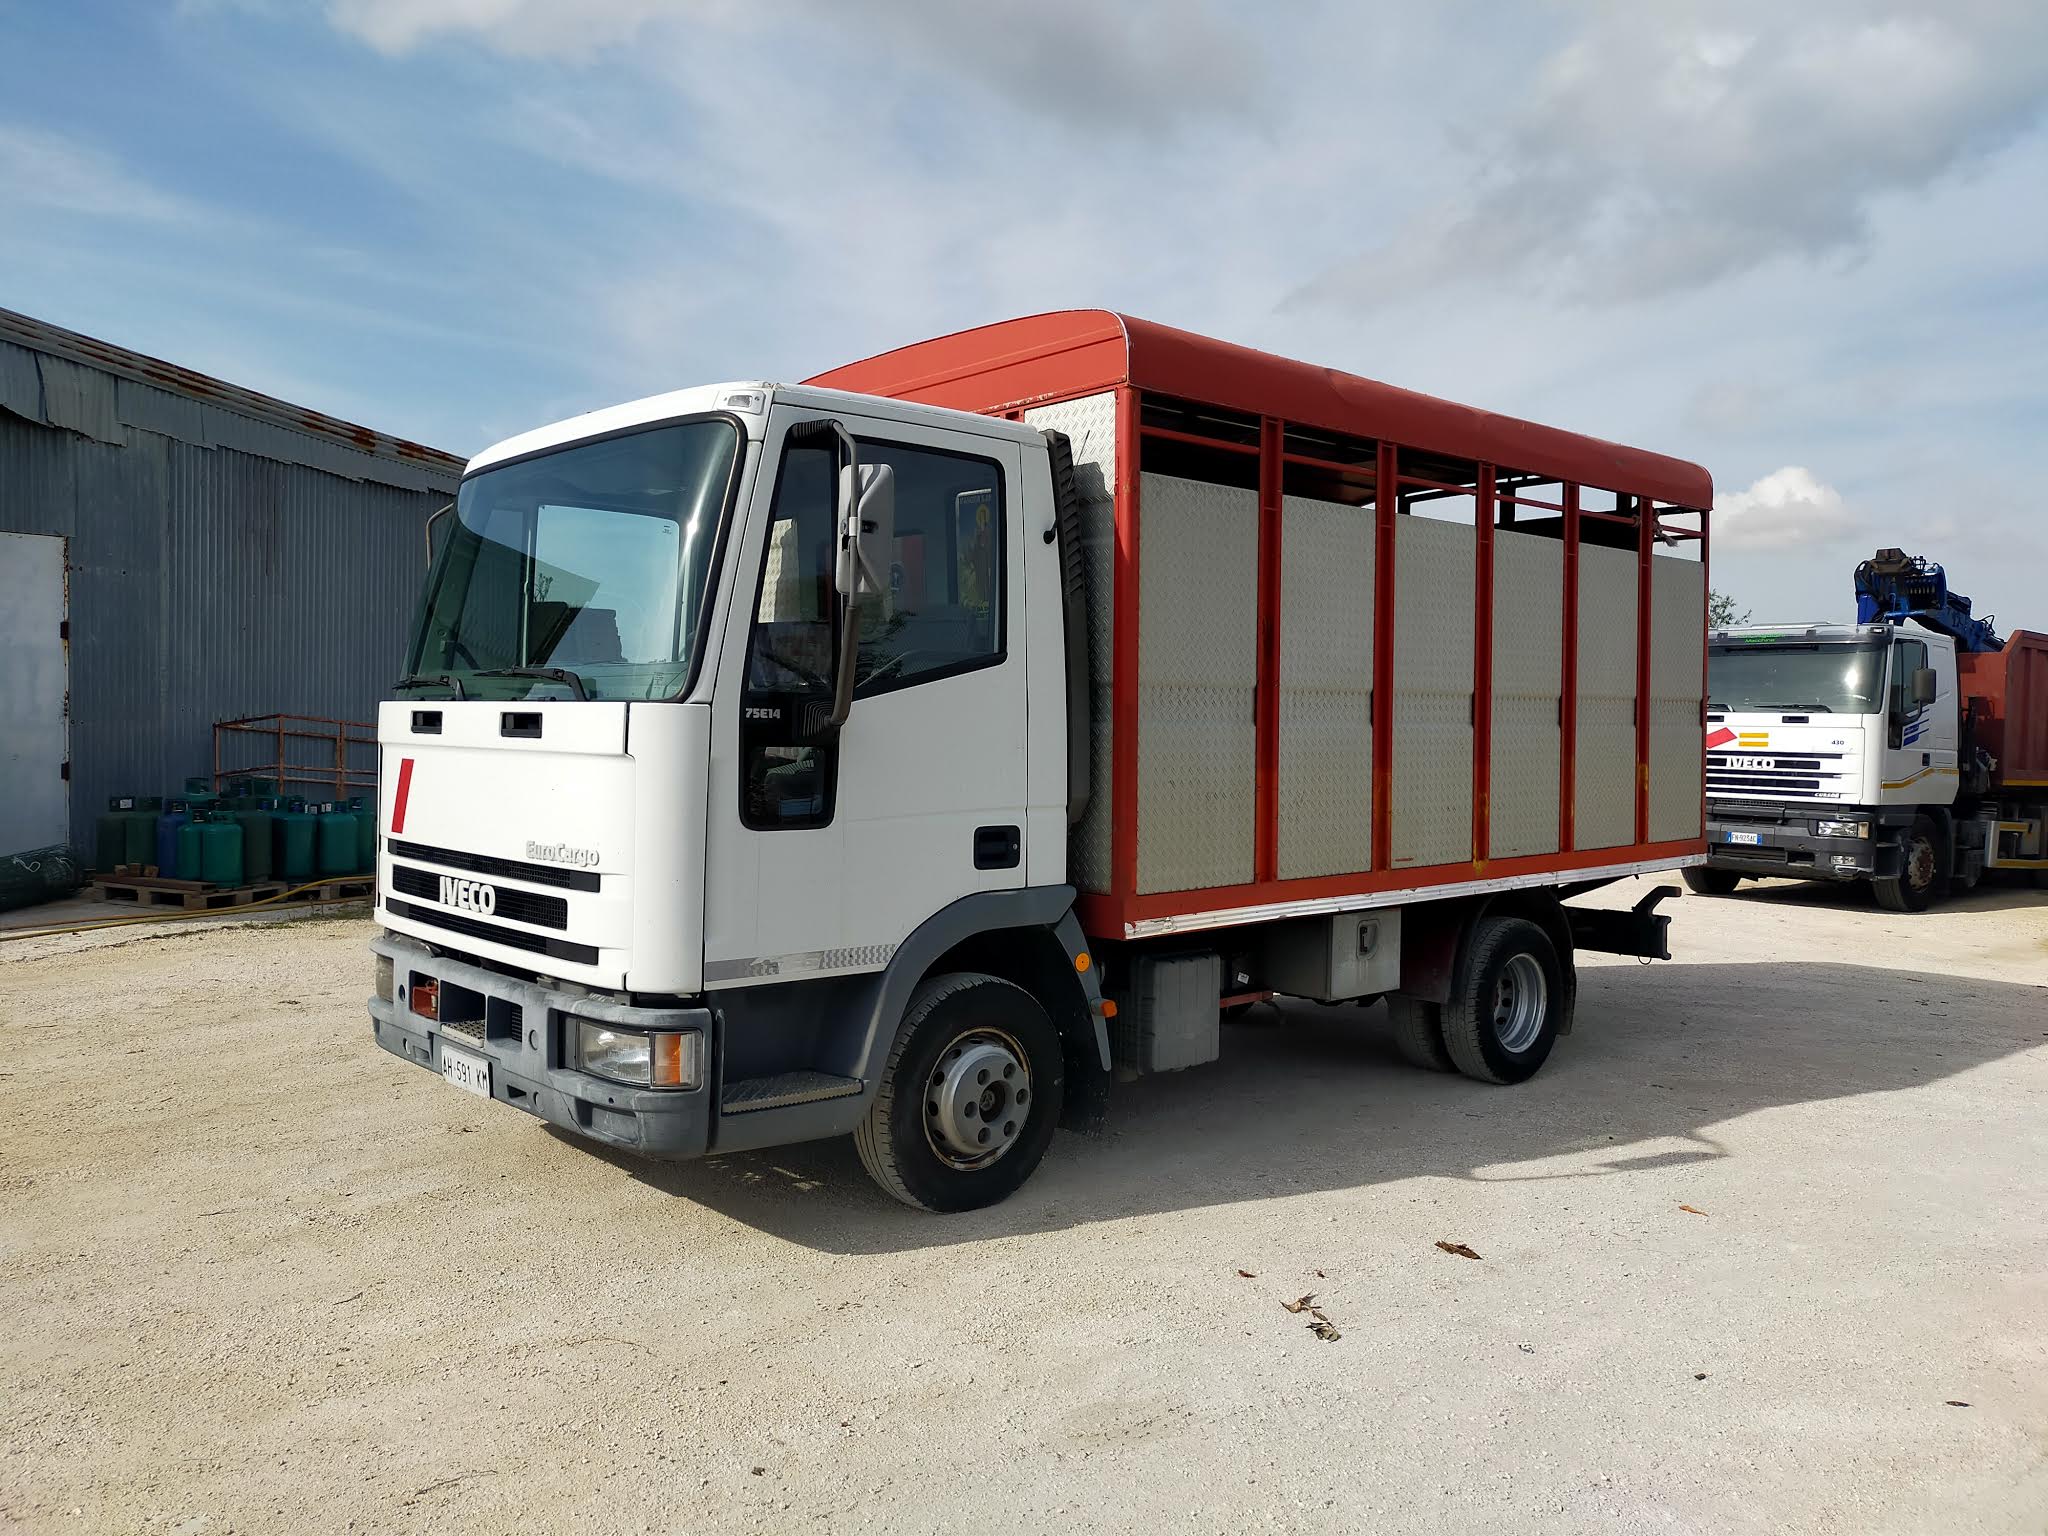 Camion Iveco 75E14 trasporto bestiame